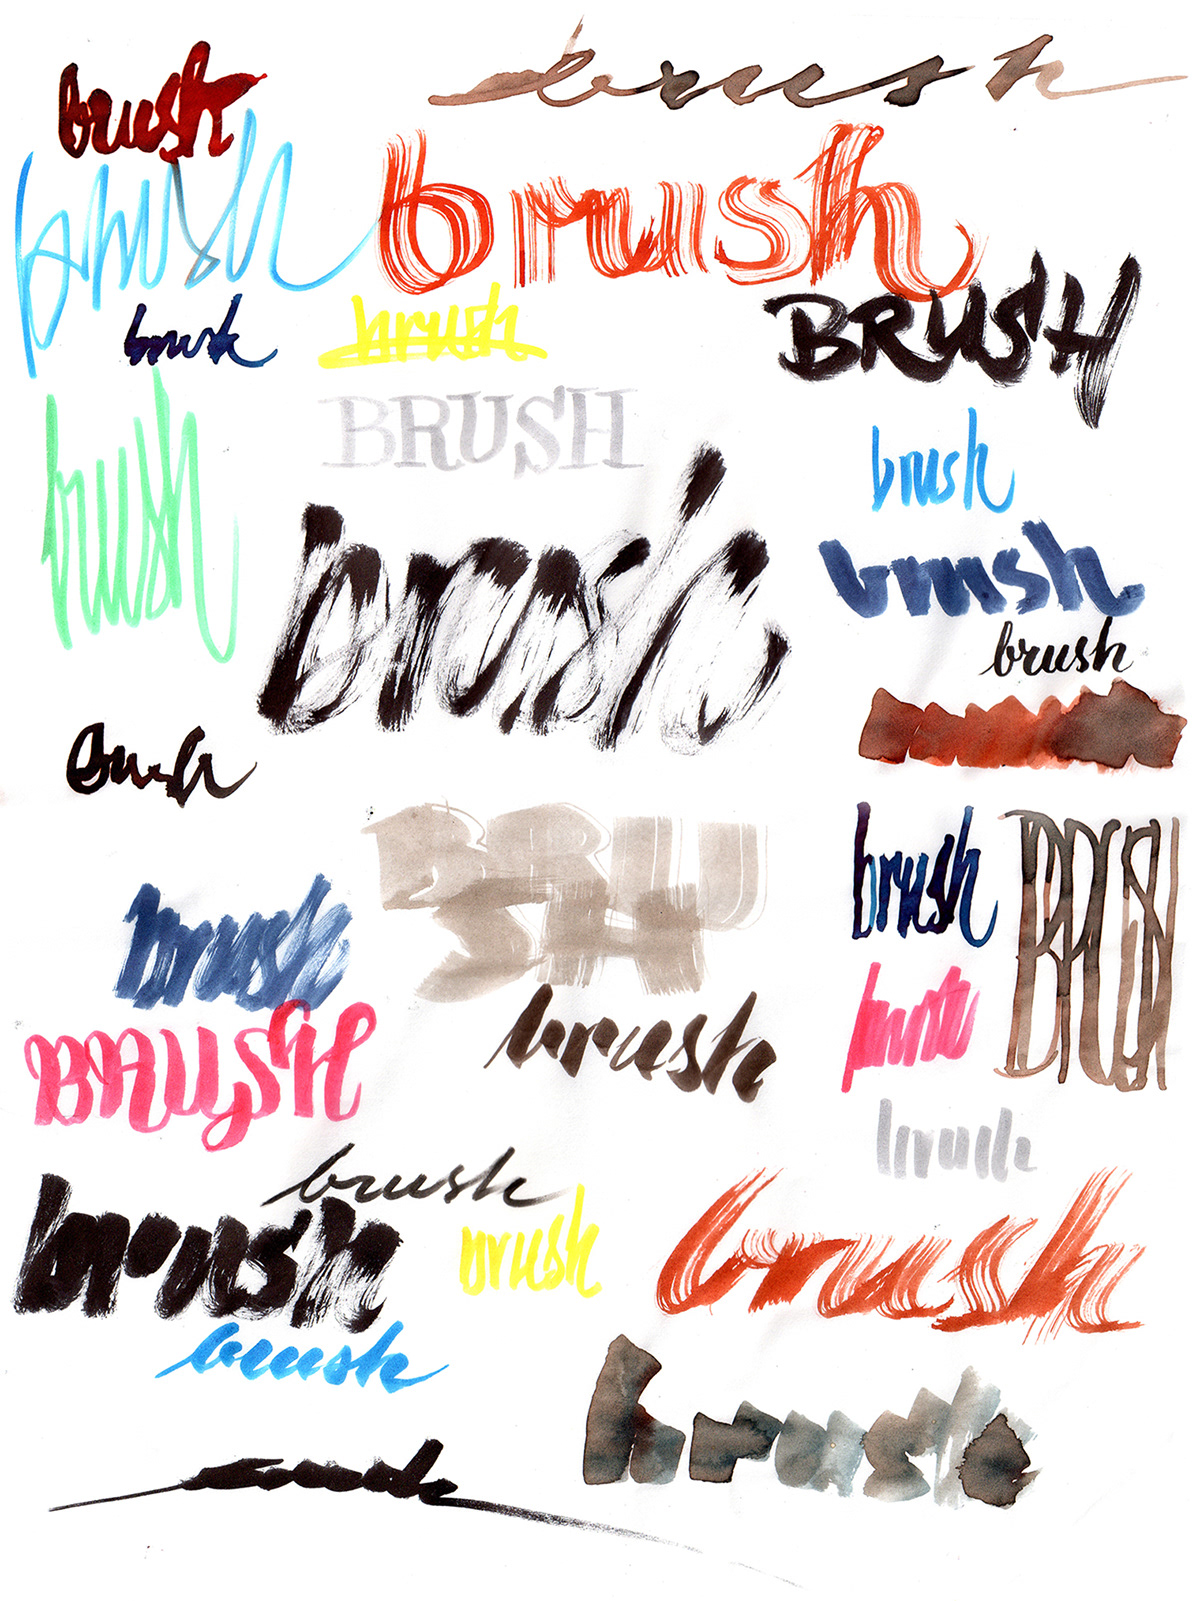 expressive exercise calligraphy exercise brush brush pen word patterns